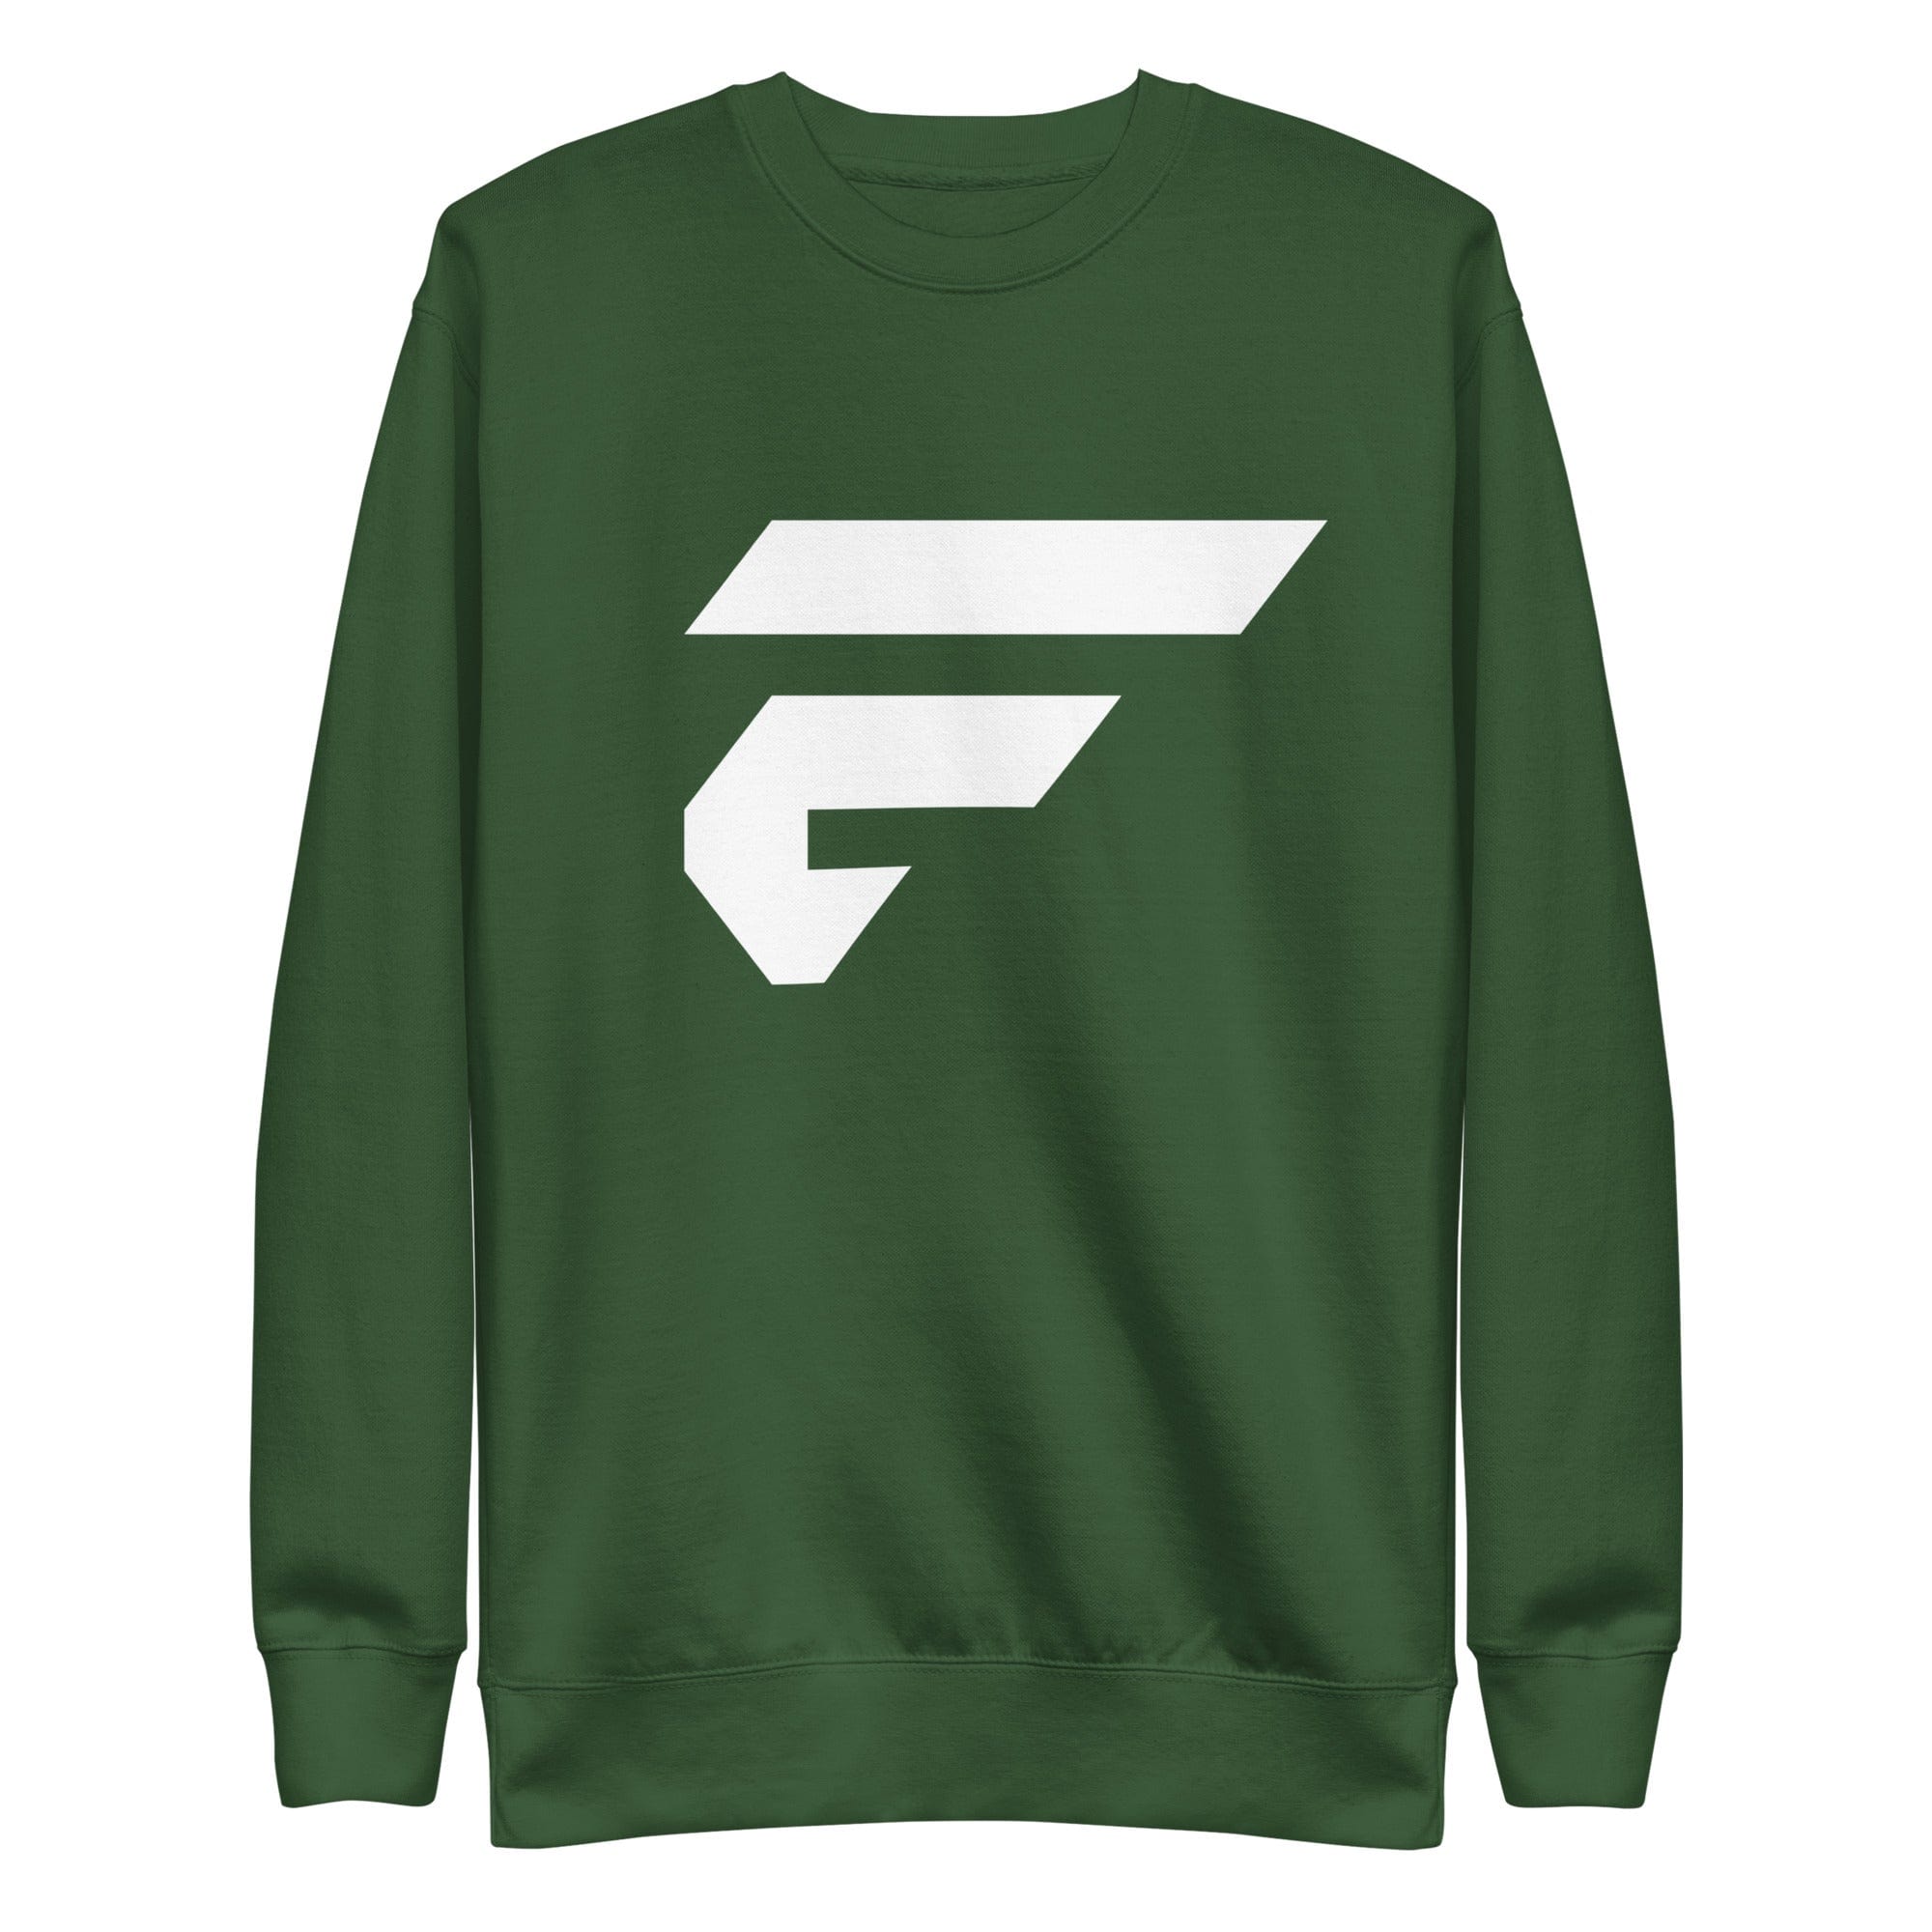 Green unisex sweatshirt with Fire Cornhole F logo in white